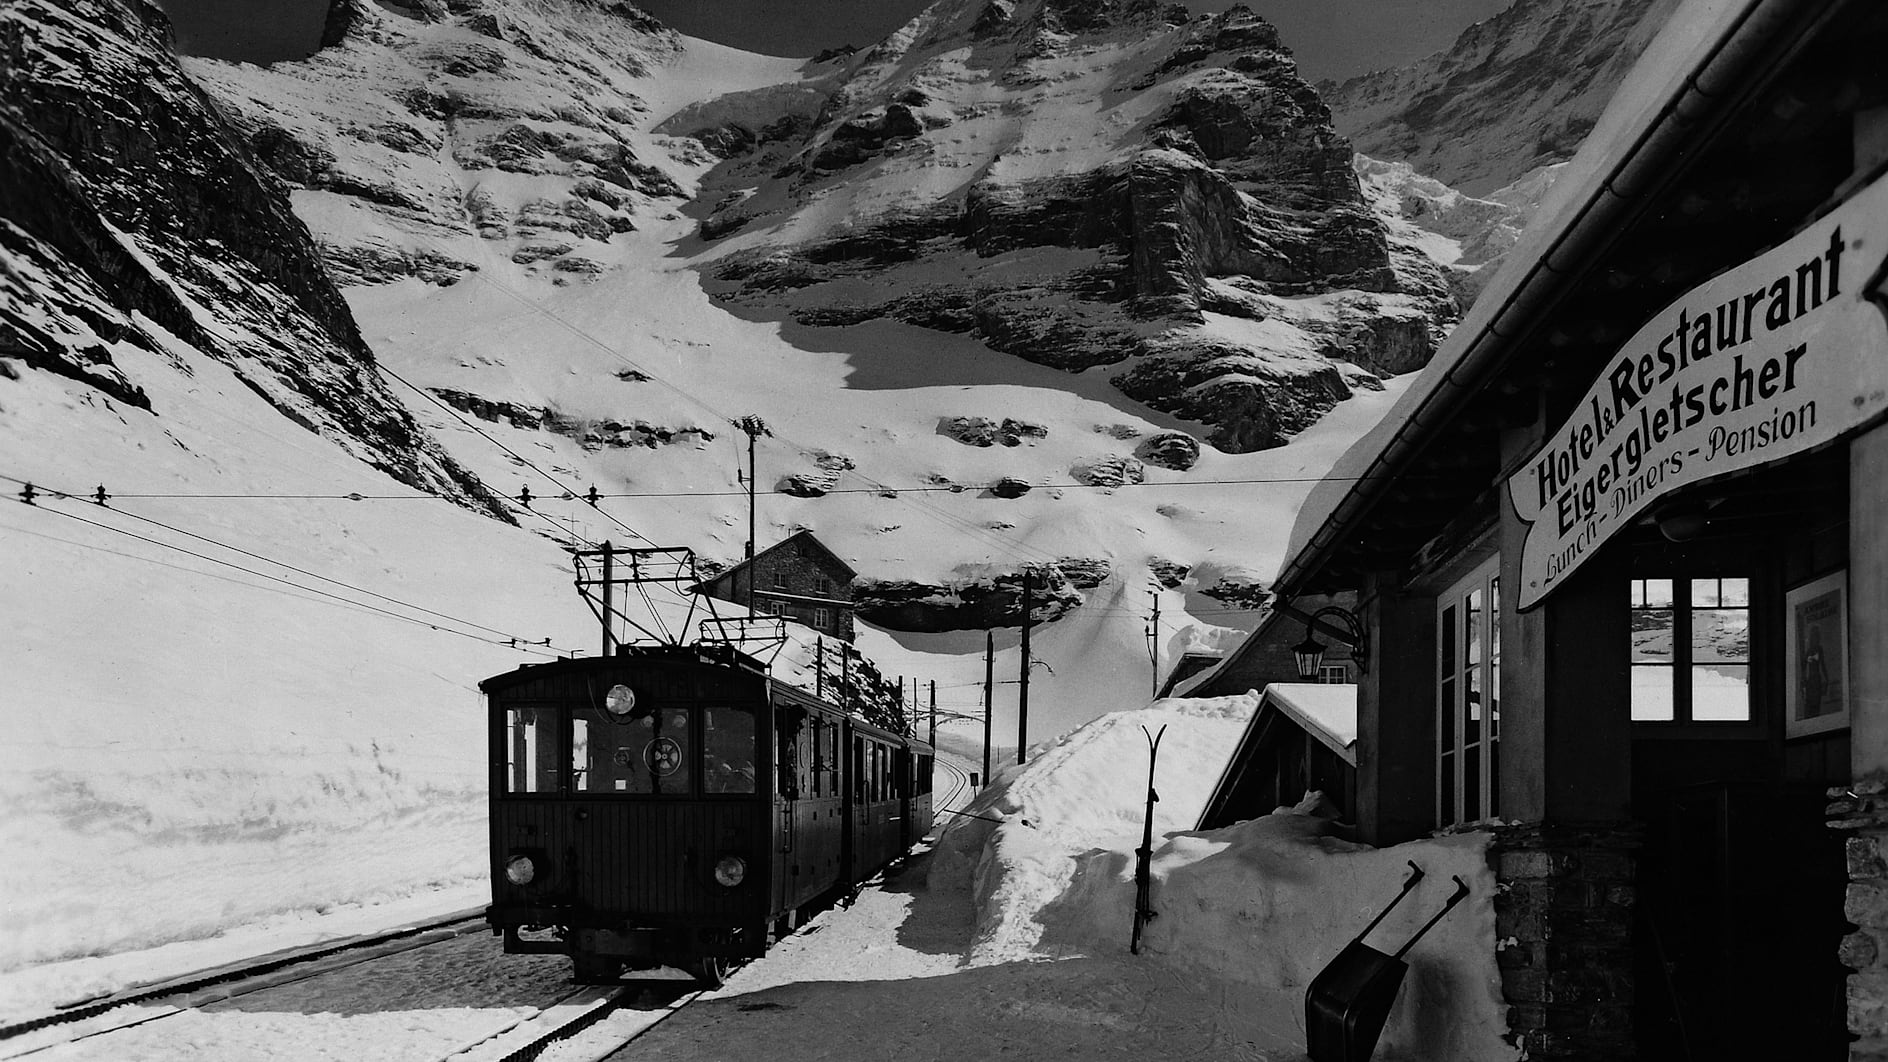 Jungfrau bahn nostalgie eigergletscher toursimus winterbetrieb